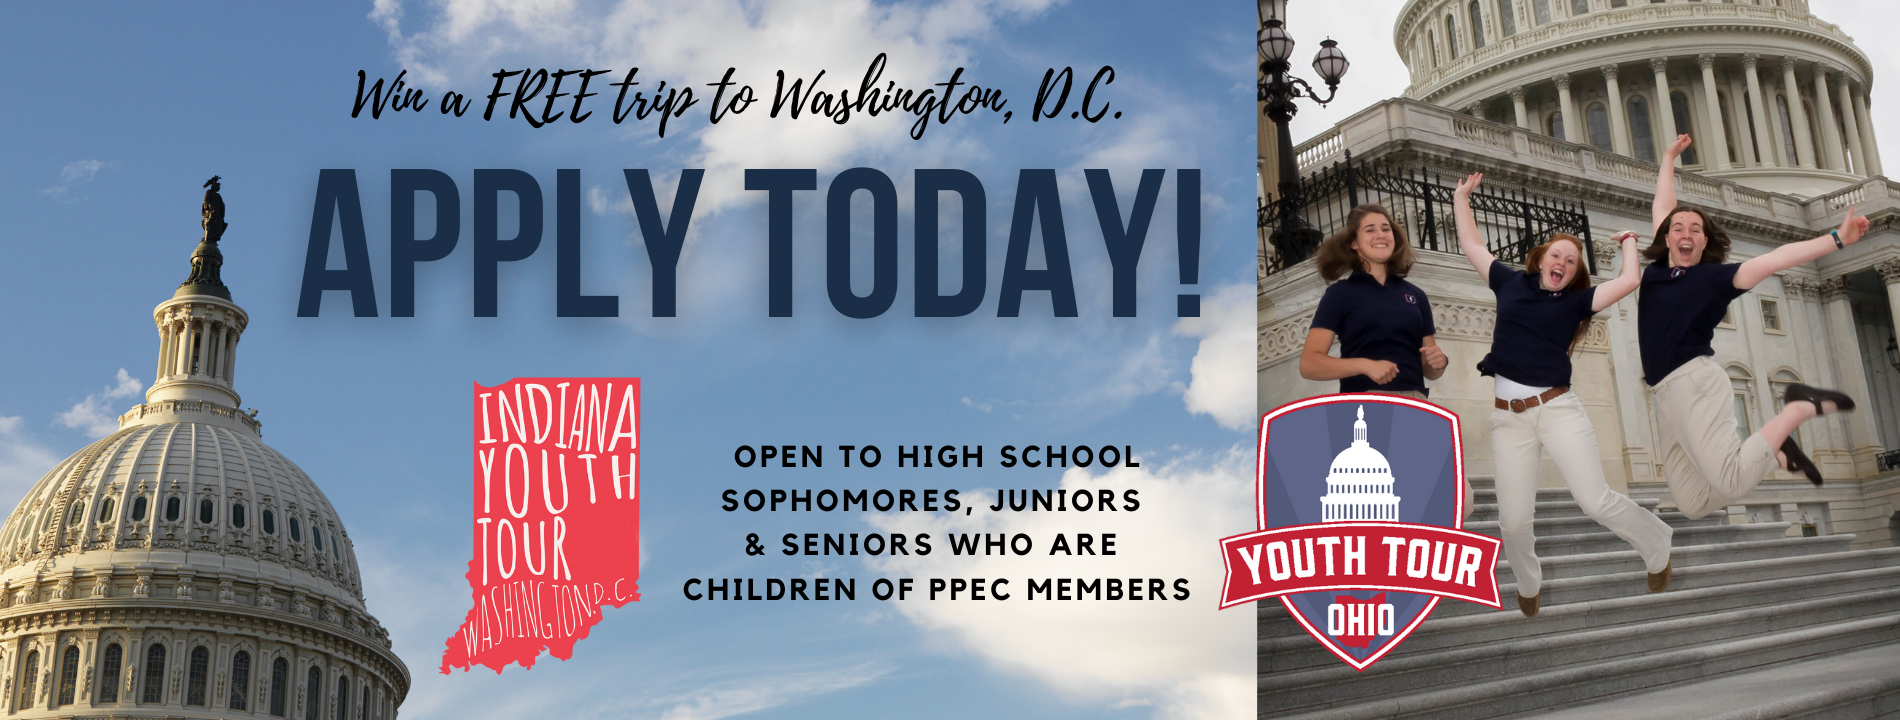 Apply for a free Youth Tour trip to Washington, DC